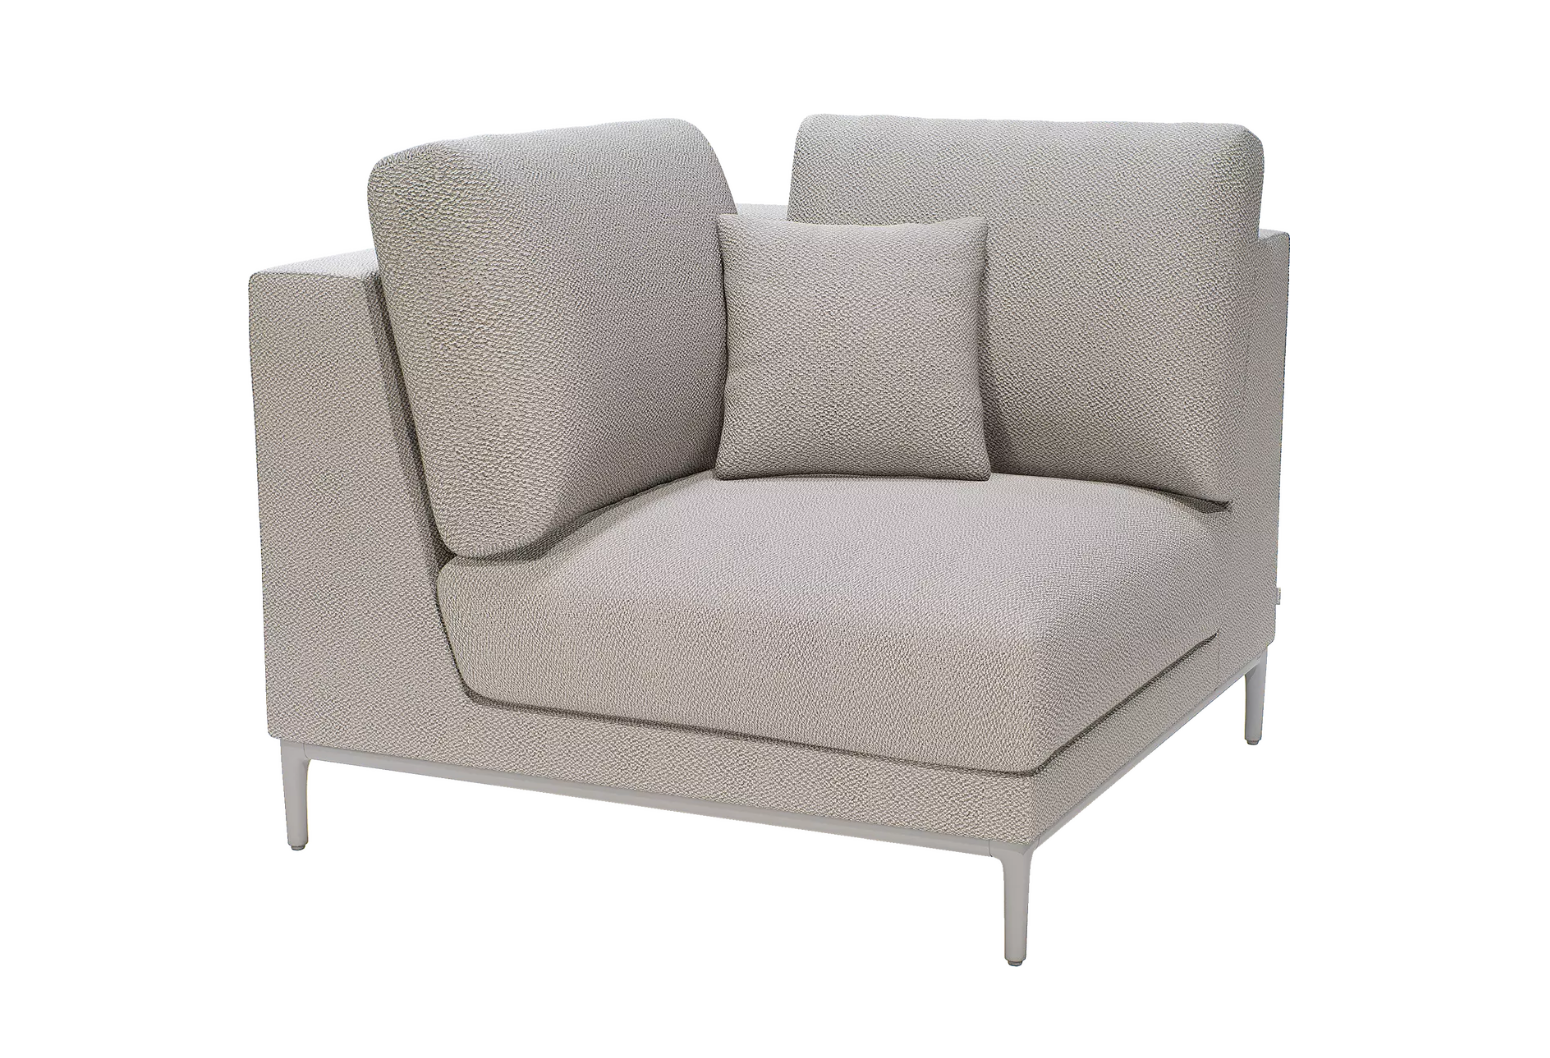 Manutti Zendo Sense hoekmodule corner seat modulaire outdoor sofa bank HORA Barneveld 2.png